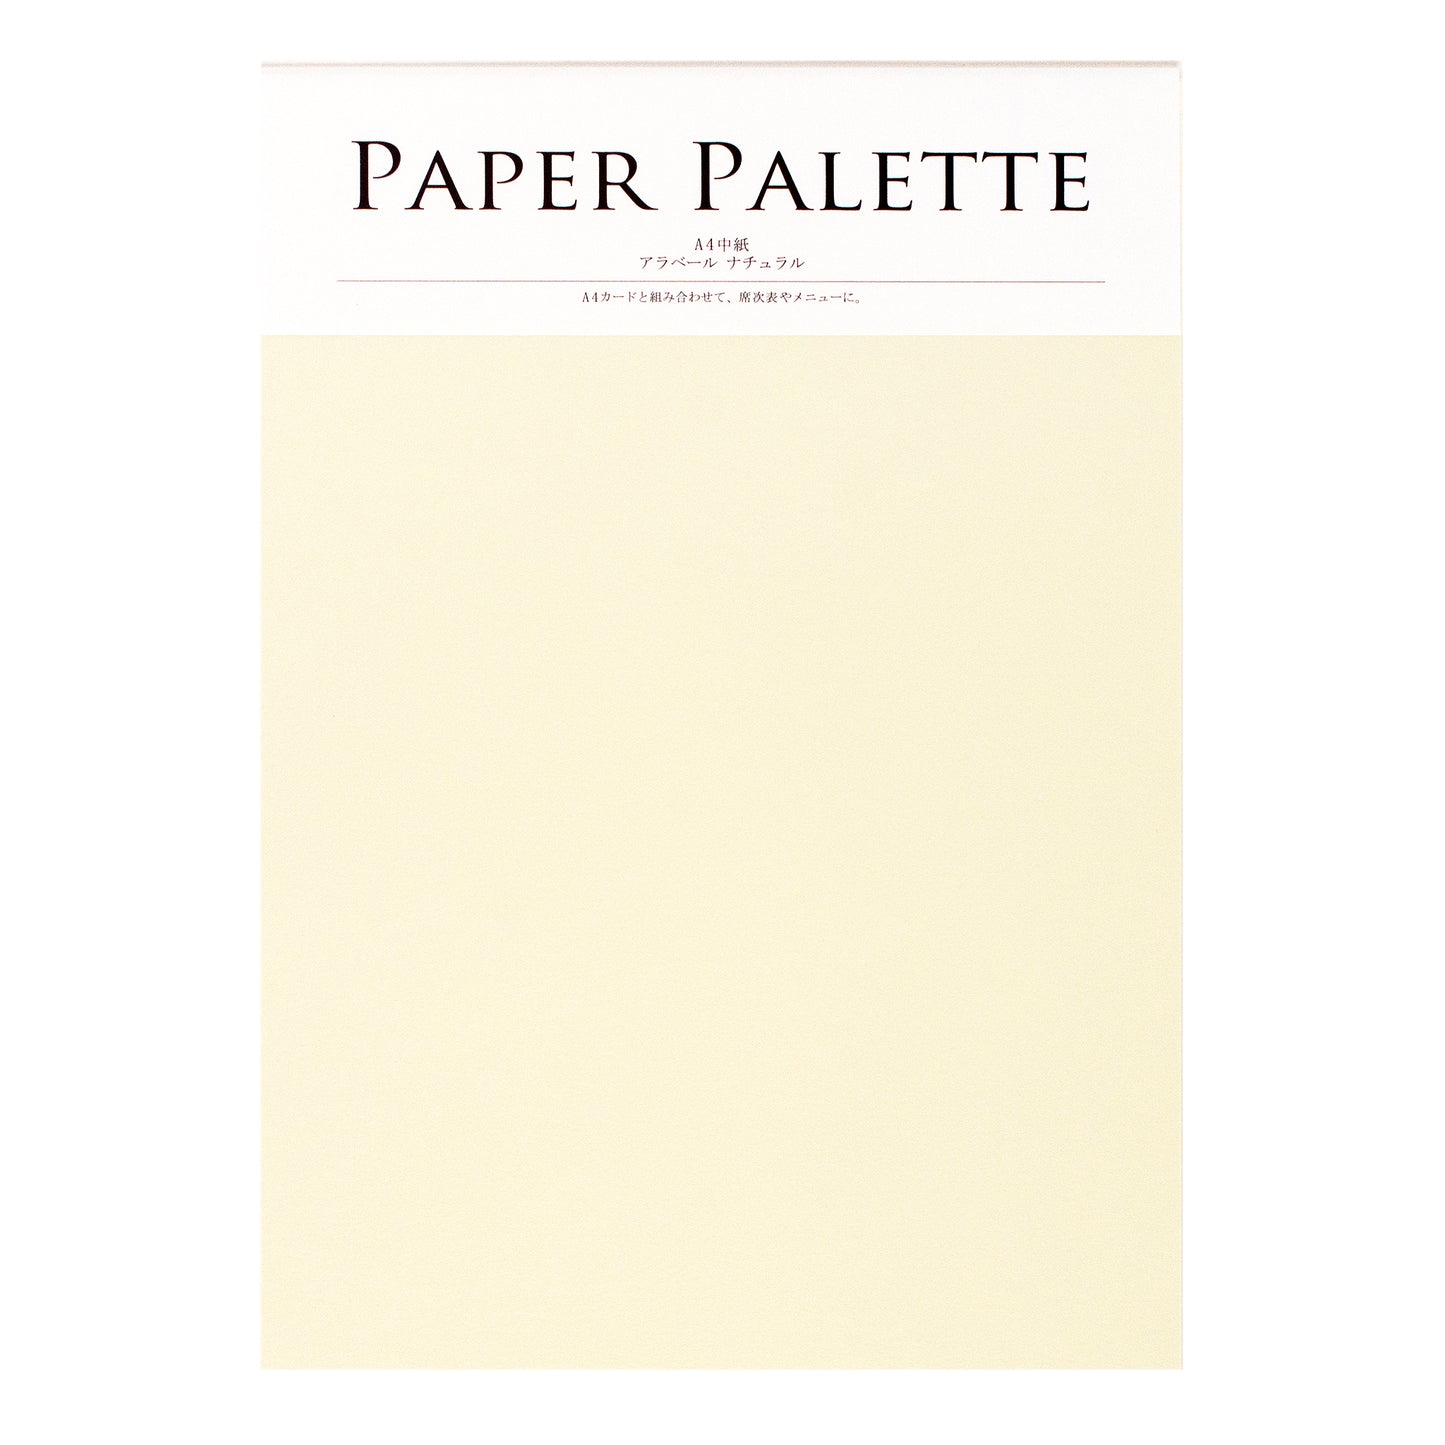 PAPER PALETTE A4中紙 アラベール ナチュラル